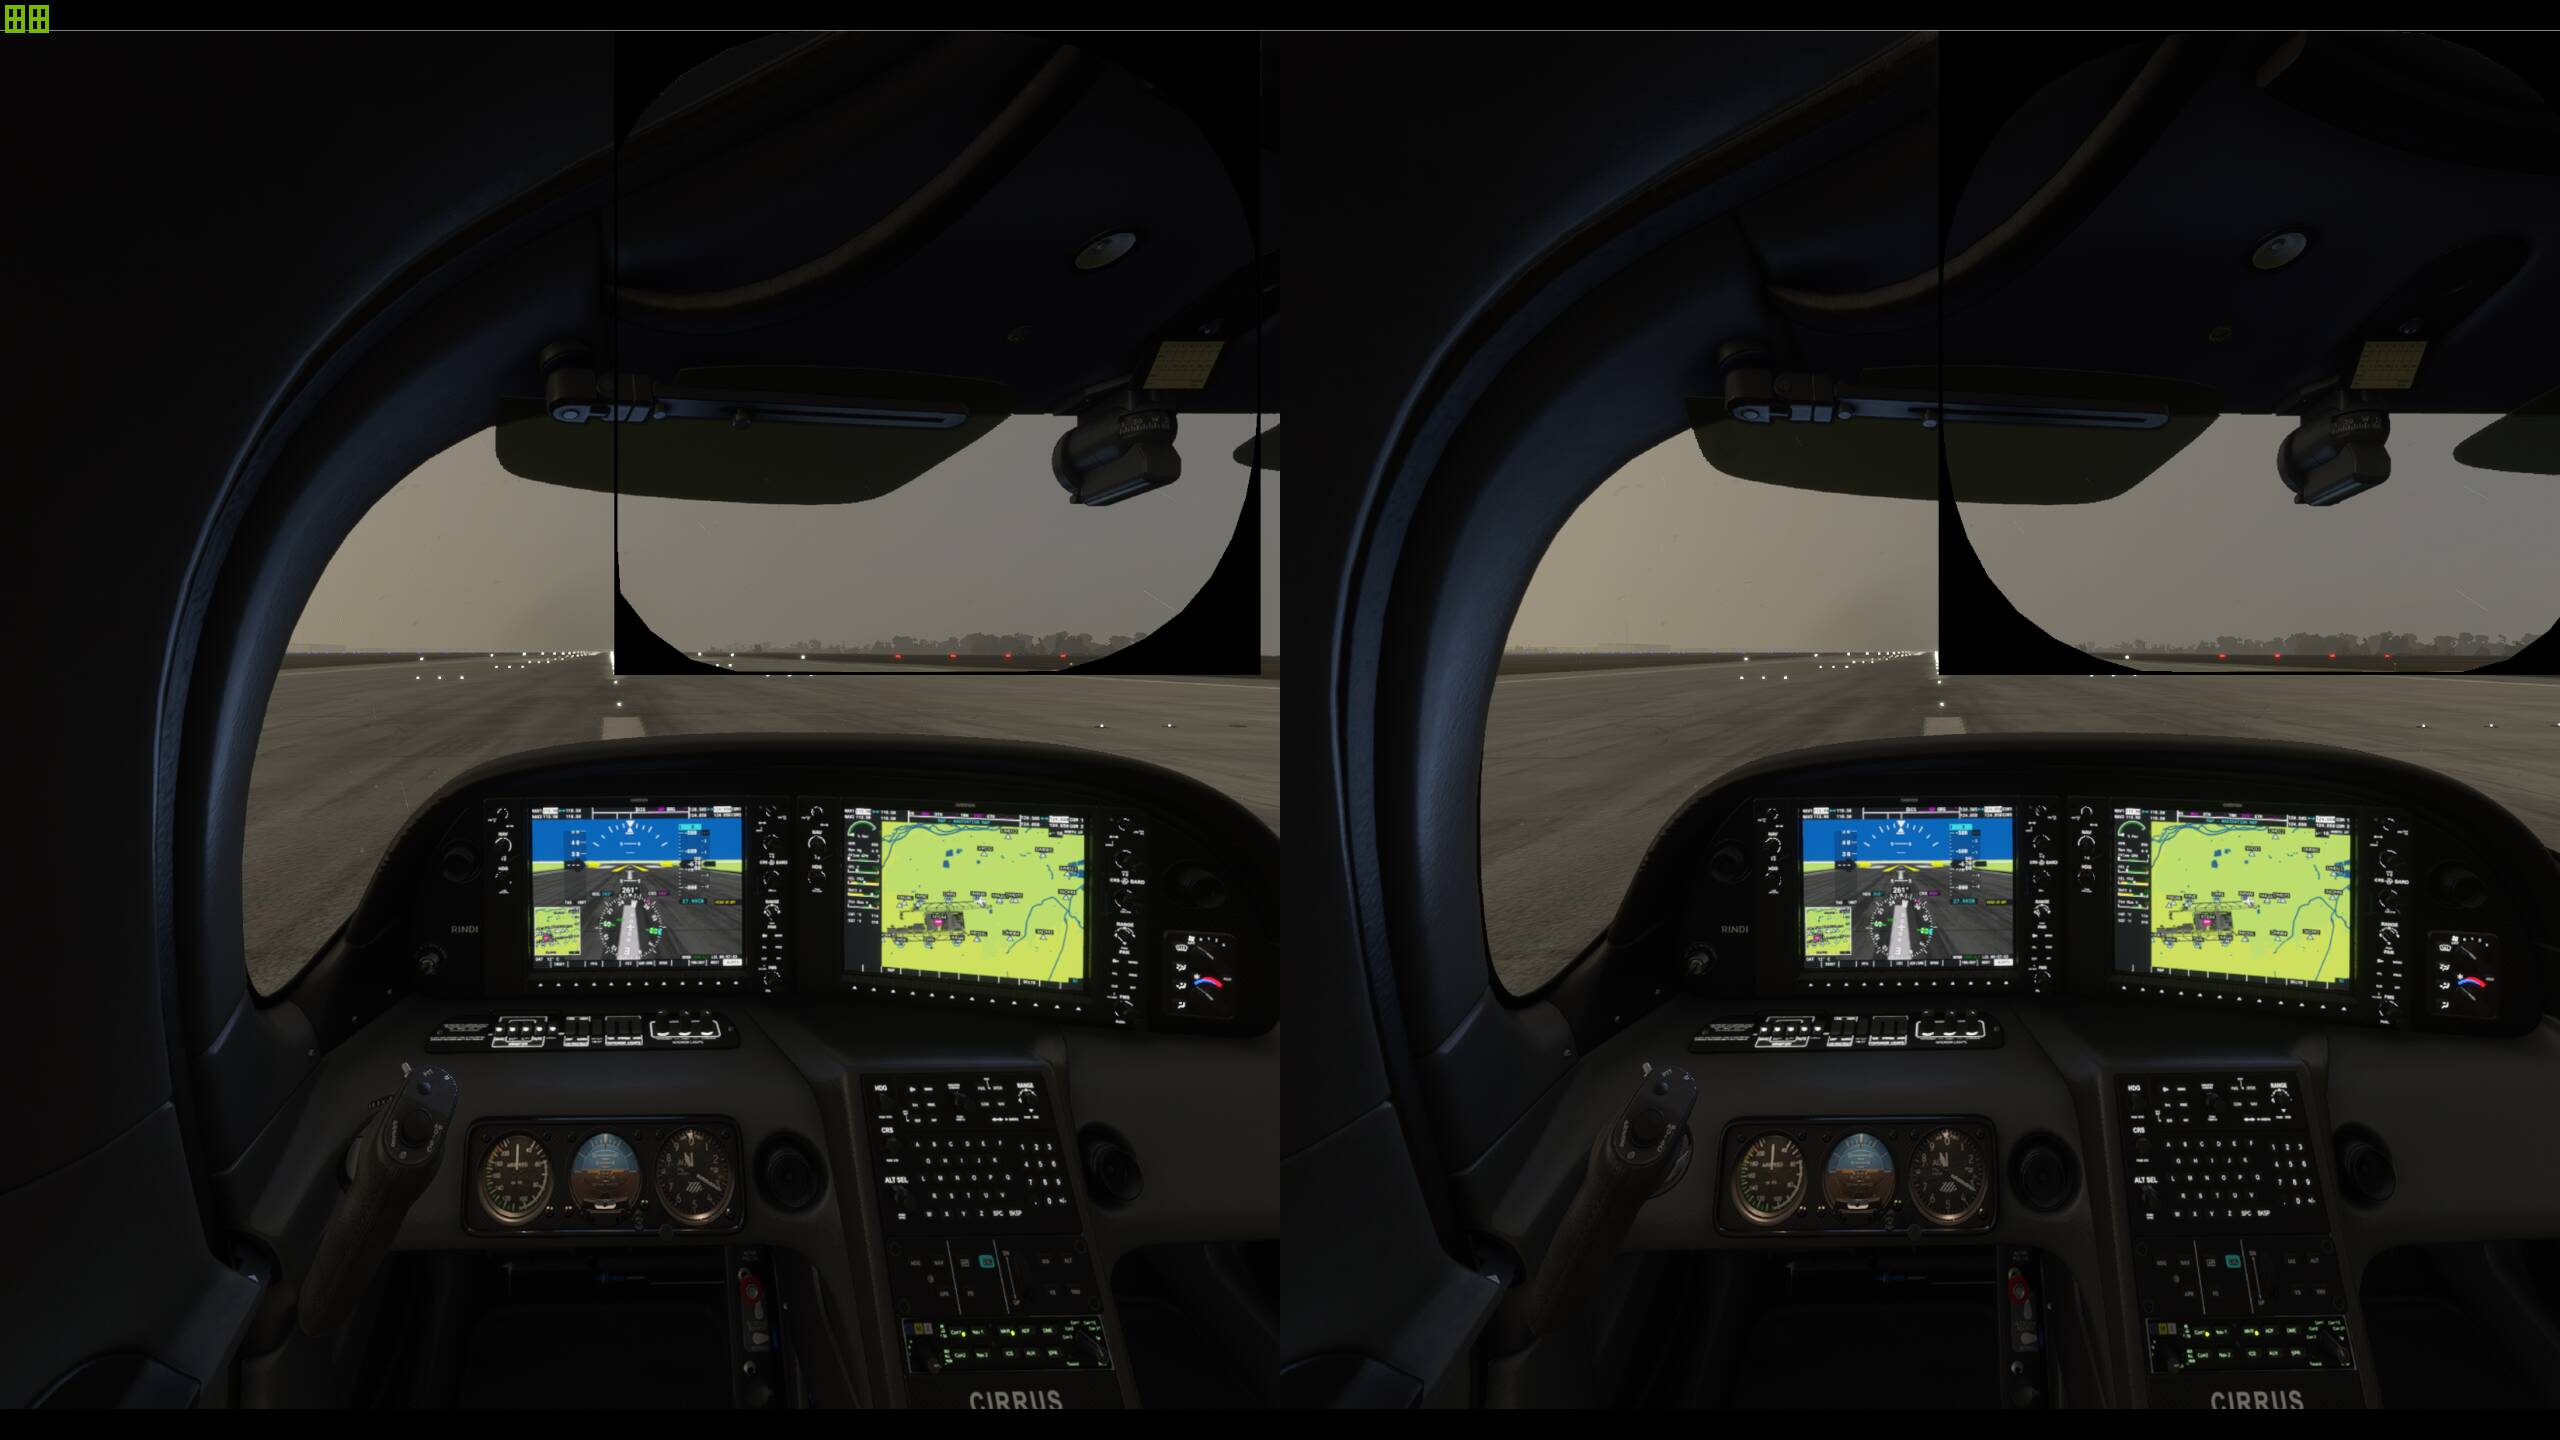 microsoft flight simulator oculus rift s